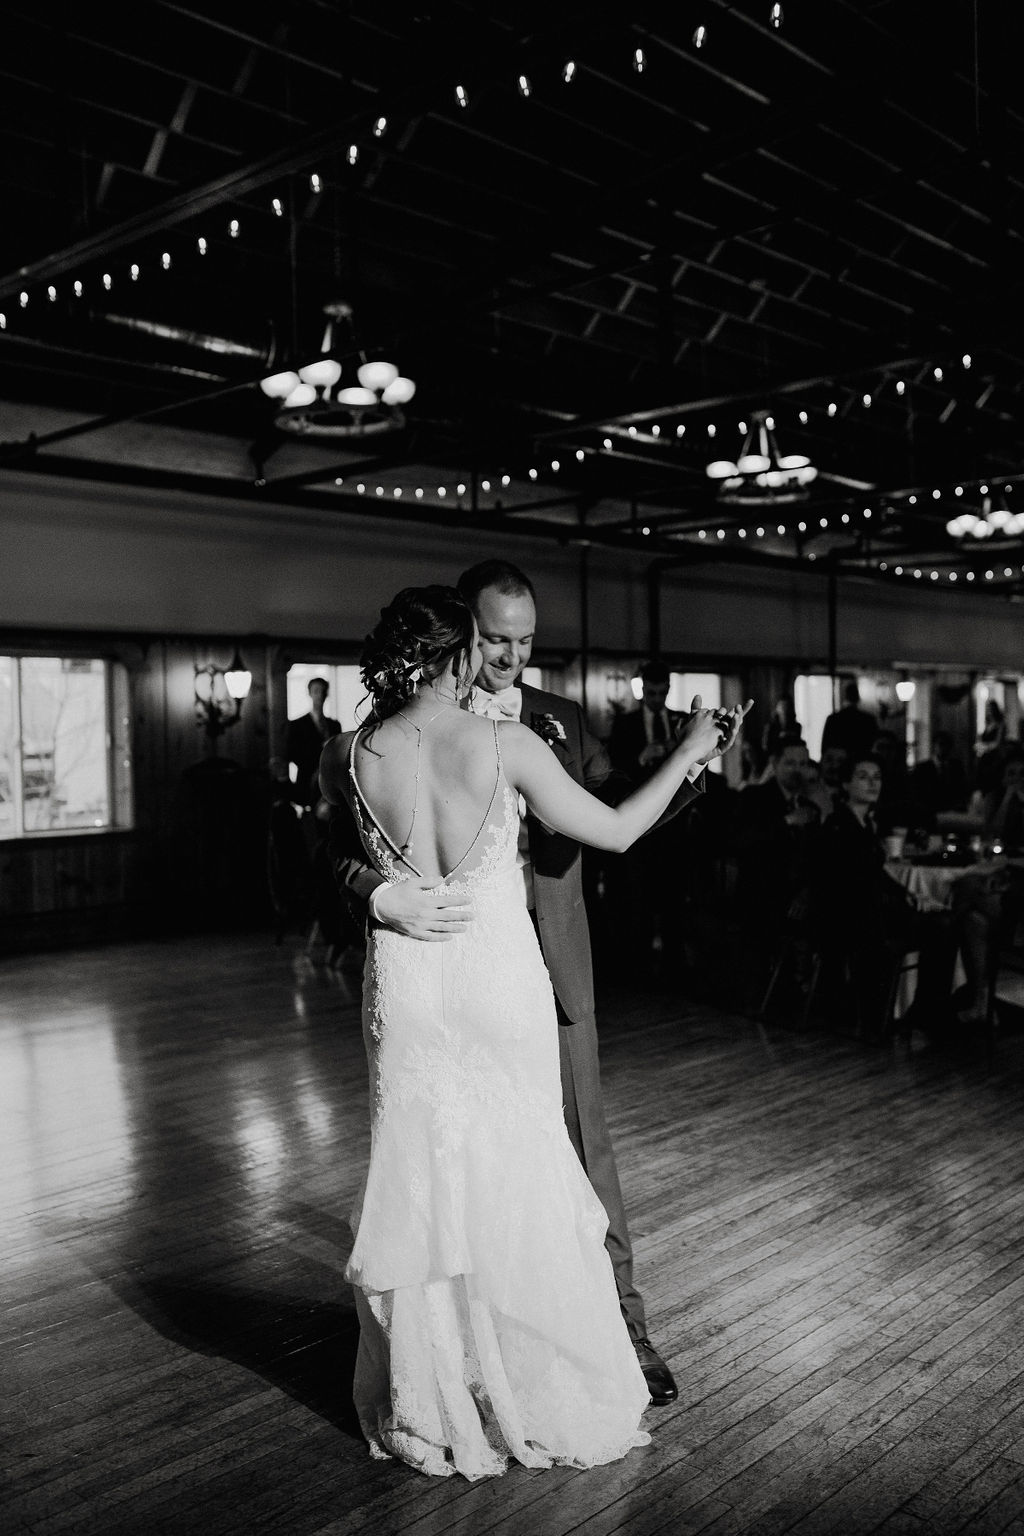 60 first dance as husband and wife ceremony rachel desjardins studio wedding story telling moments photography kellermans event center minnesota emotional.jpg